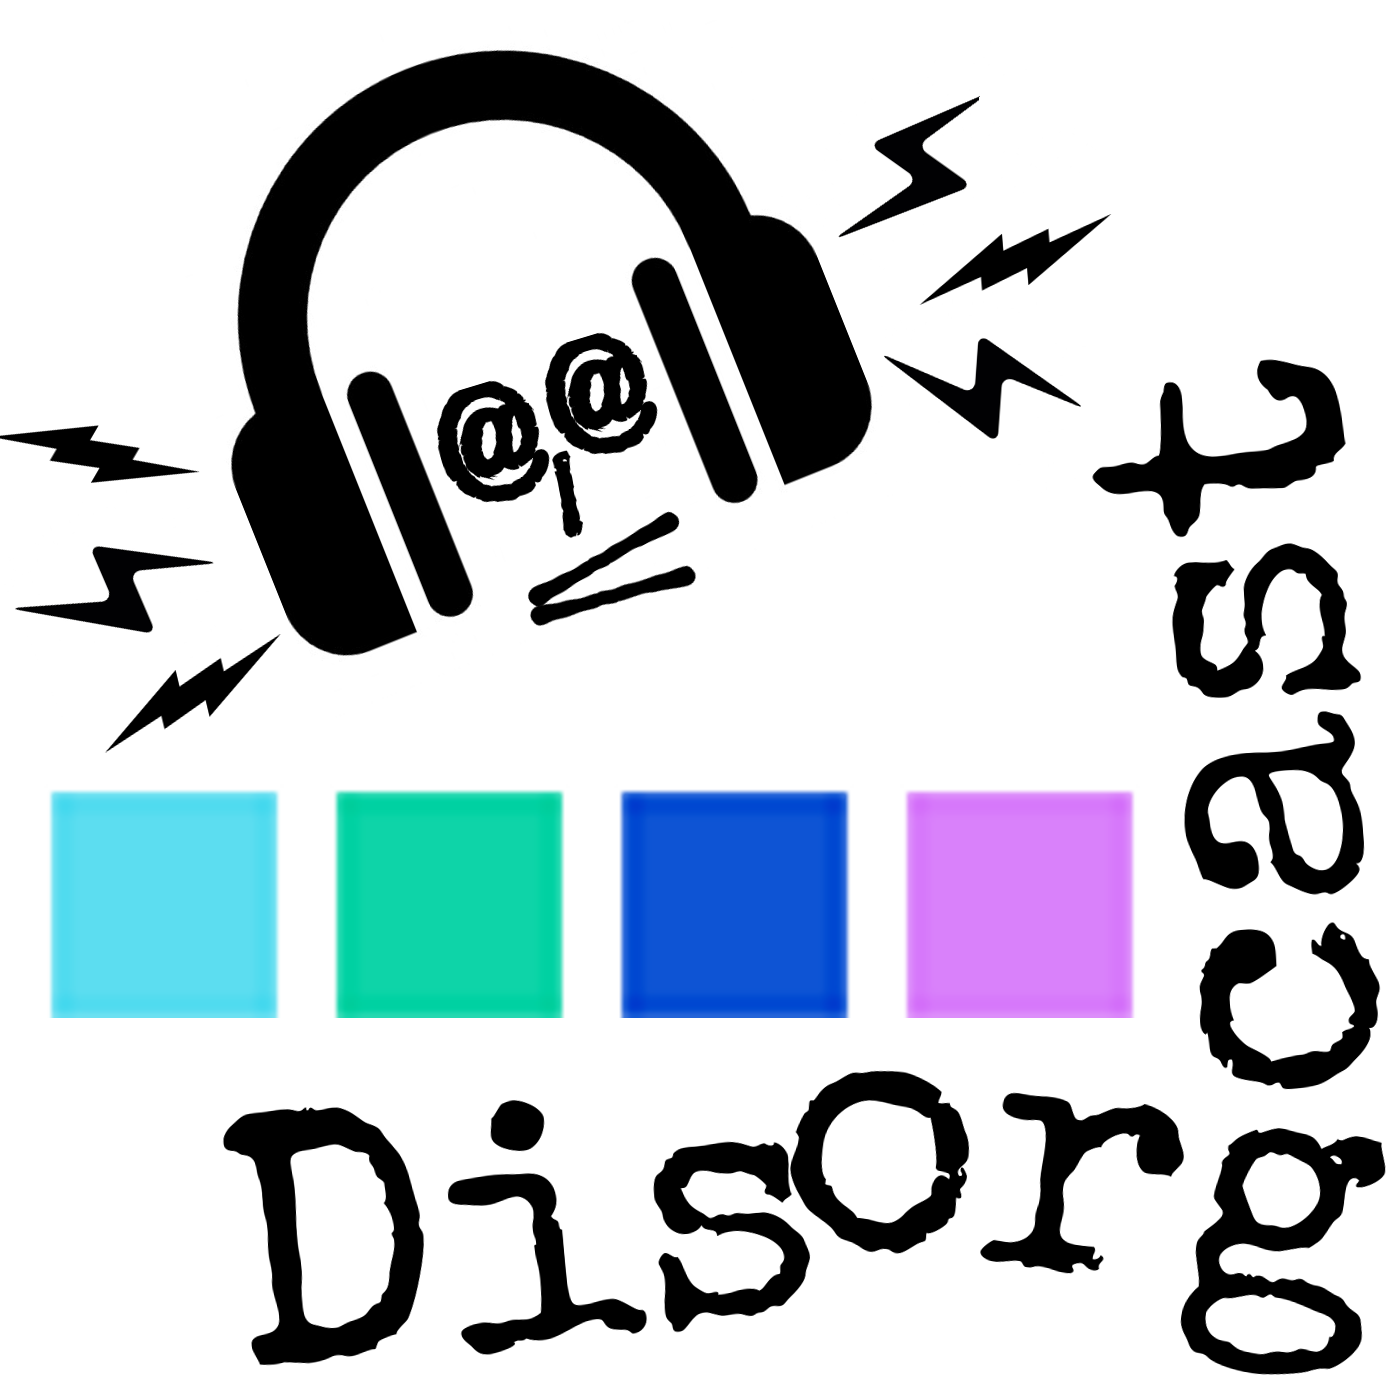 Disorgcast 4: Abba-ttoir